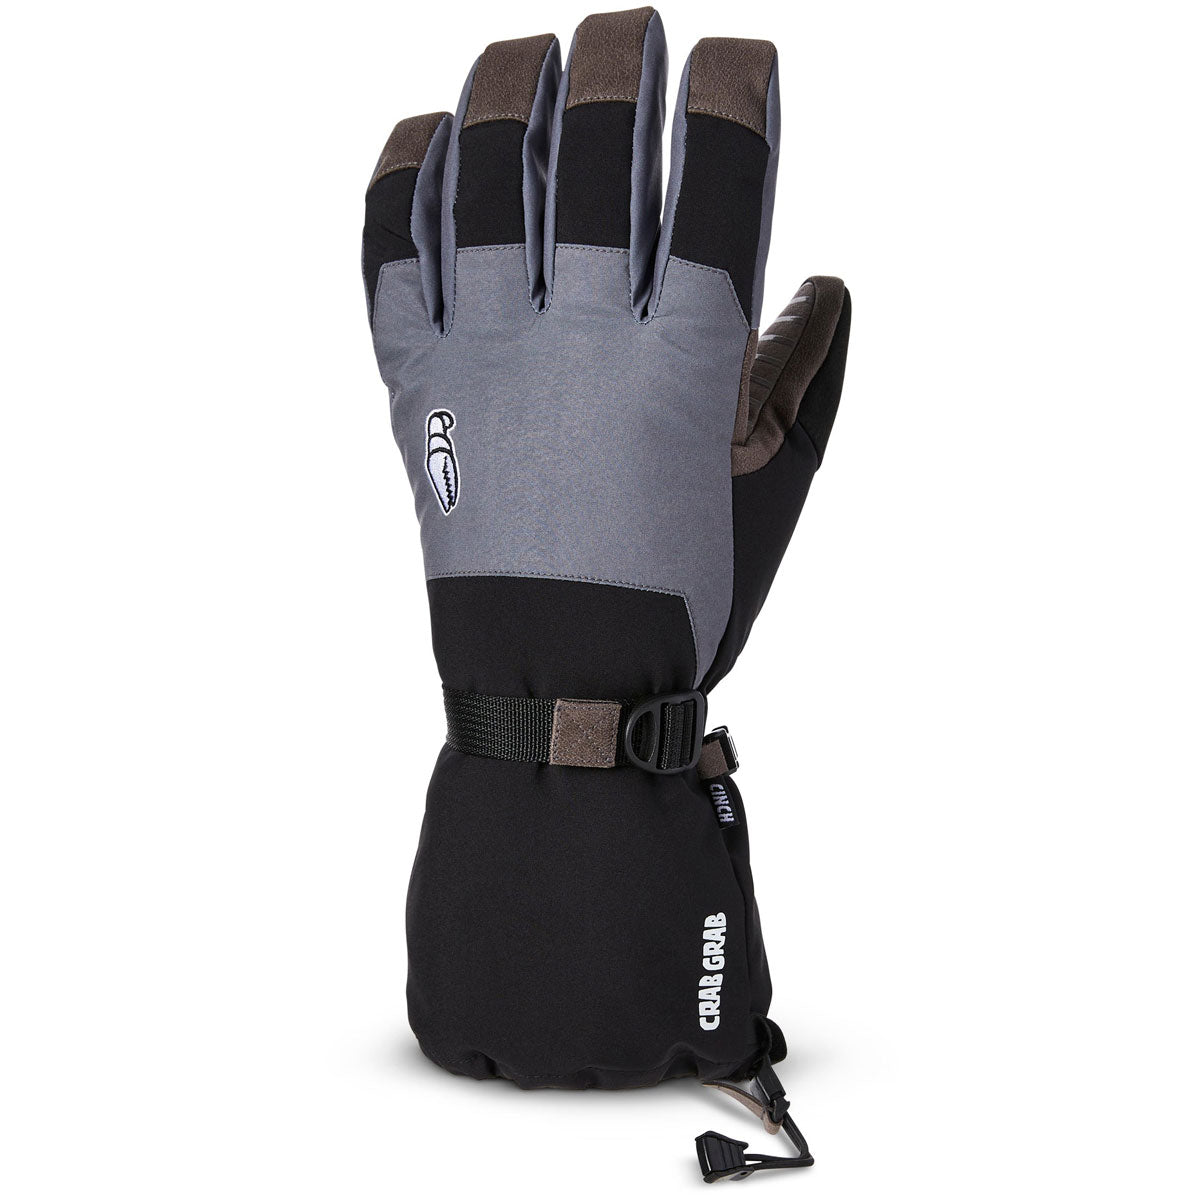 Crab Grab Cinch Snowboard Gloves - Black/Grey image 1